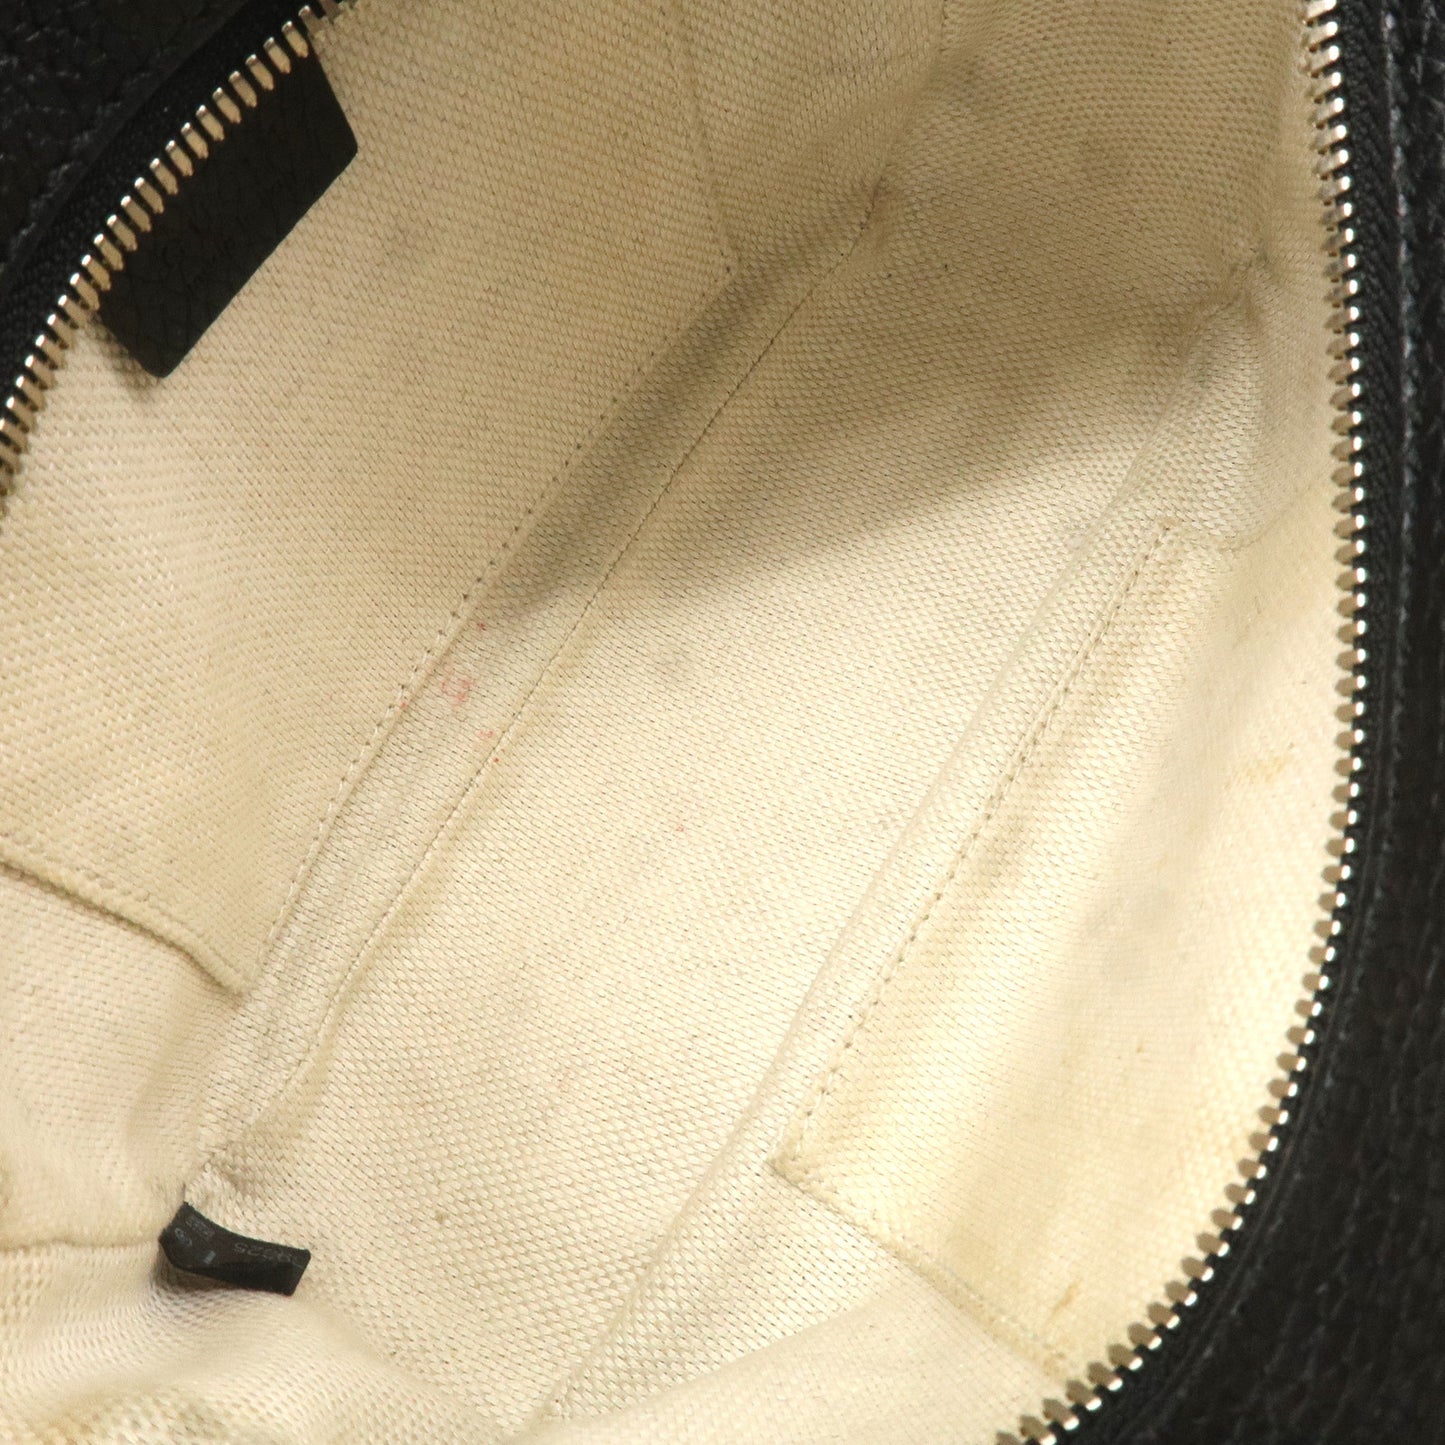 GUCCI SOHO Small Disco Leather Shoulder Bag Crossbody Bag 308364